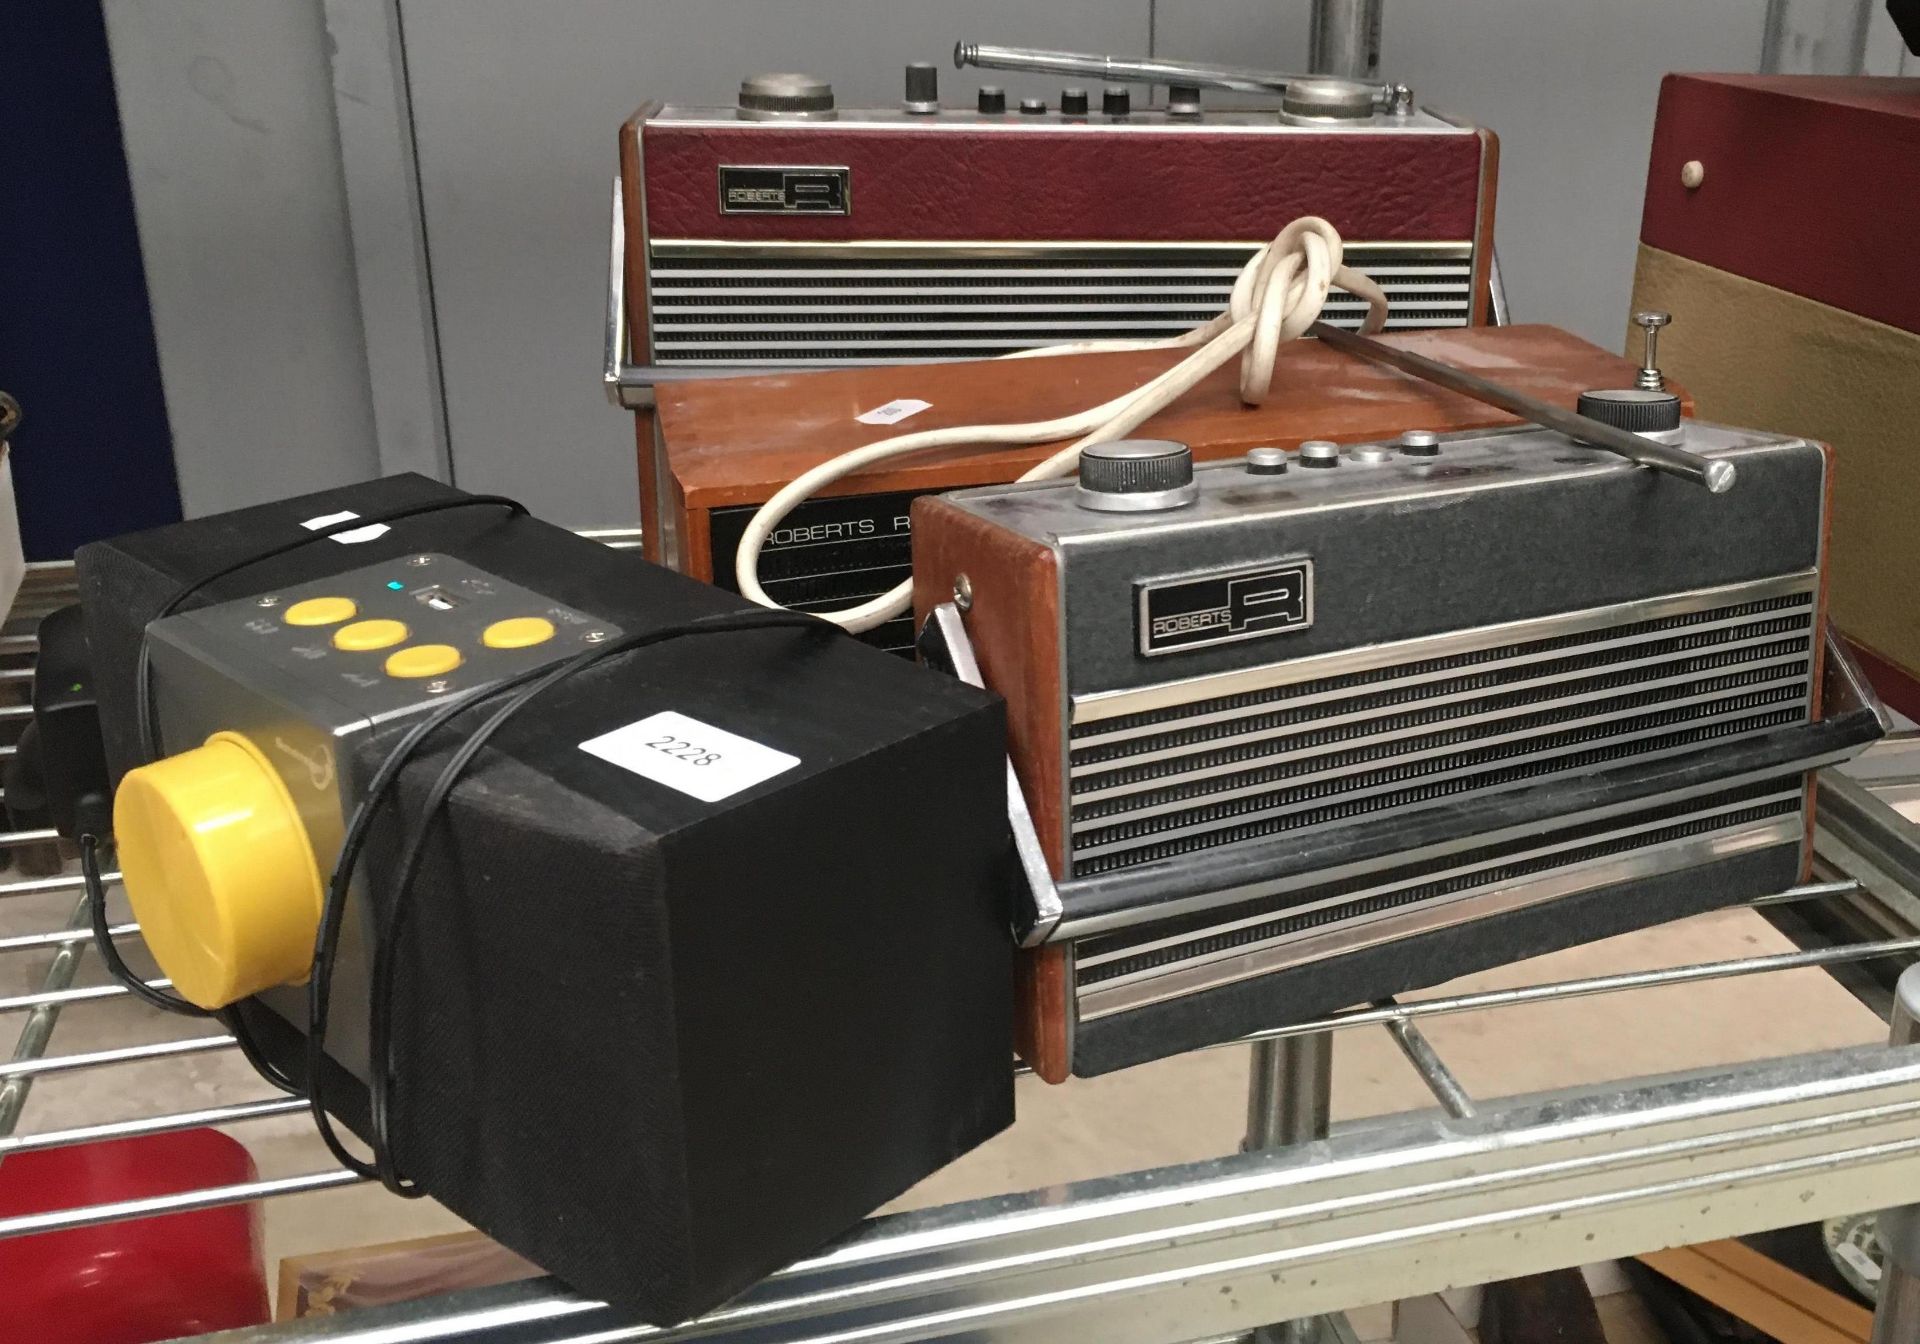 Three Roberts portable radios (no test plugs cut off) and a Sovereign KA-5007 portable radio